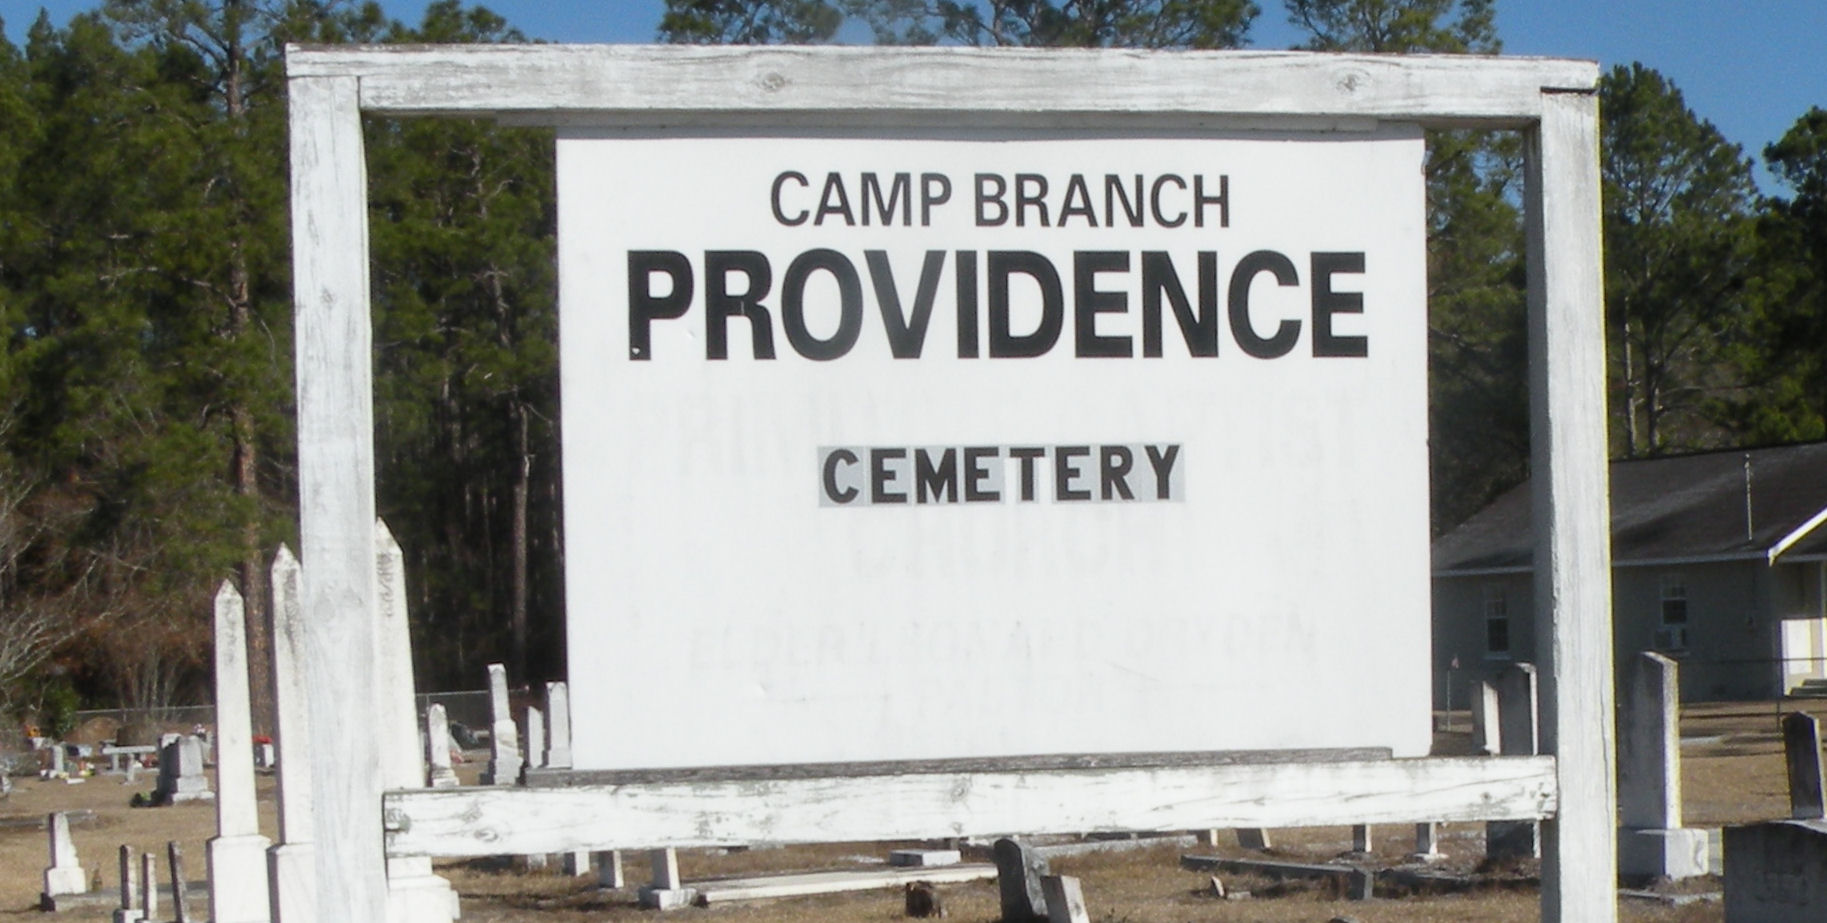 Camp Branch Primitive Baptist Church Cemetery